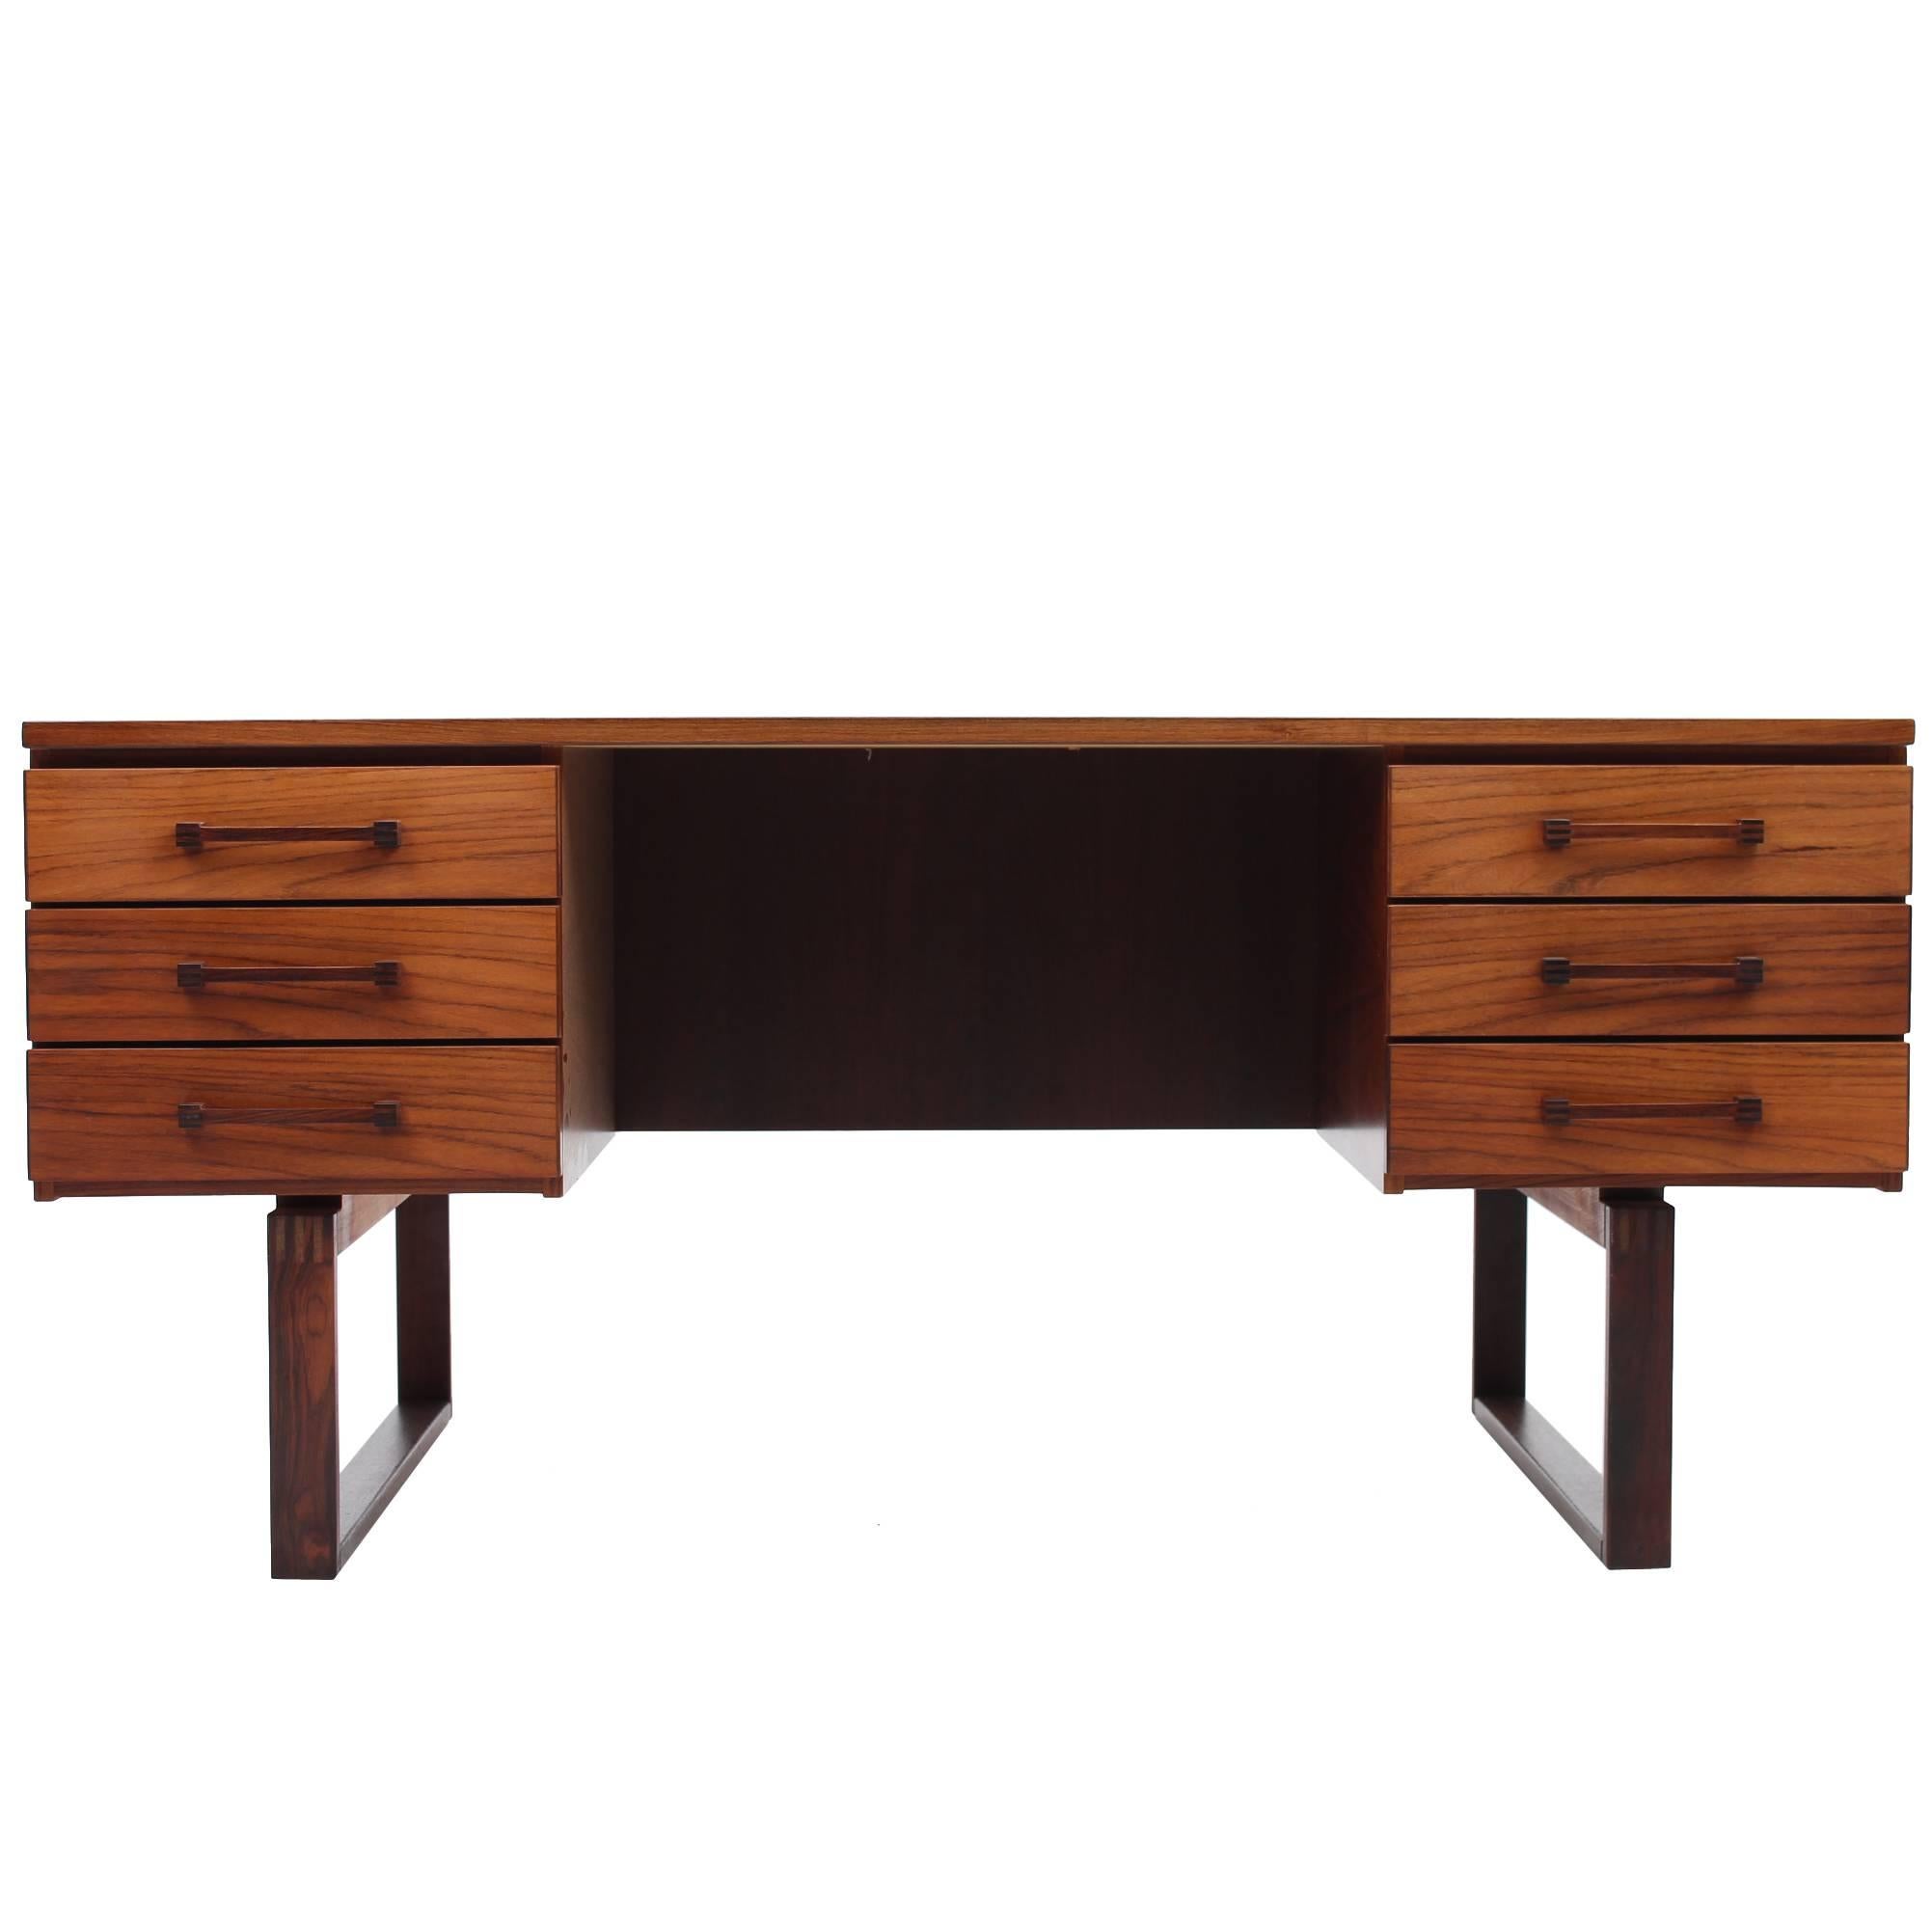 Rosewood Desk by Preben Schou Andersen for PSA Furniture, Scandinavian Modern